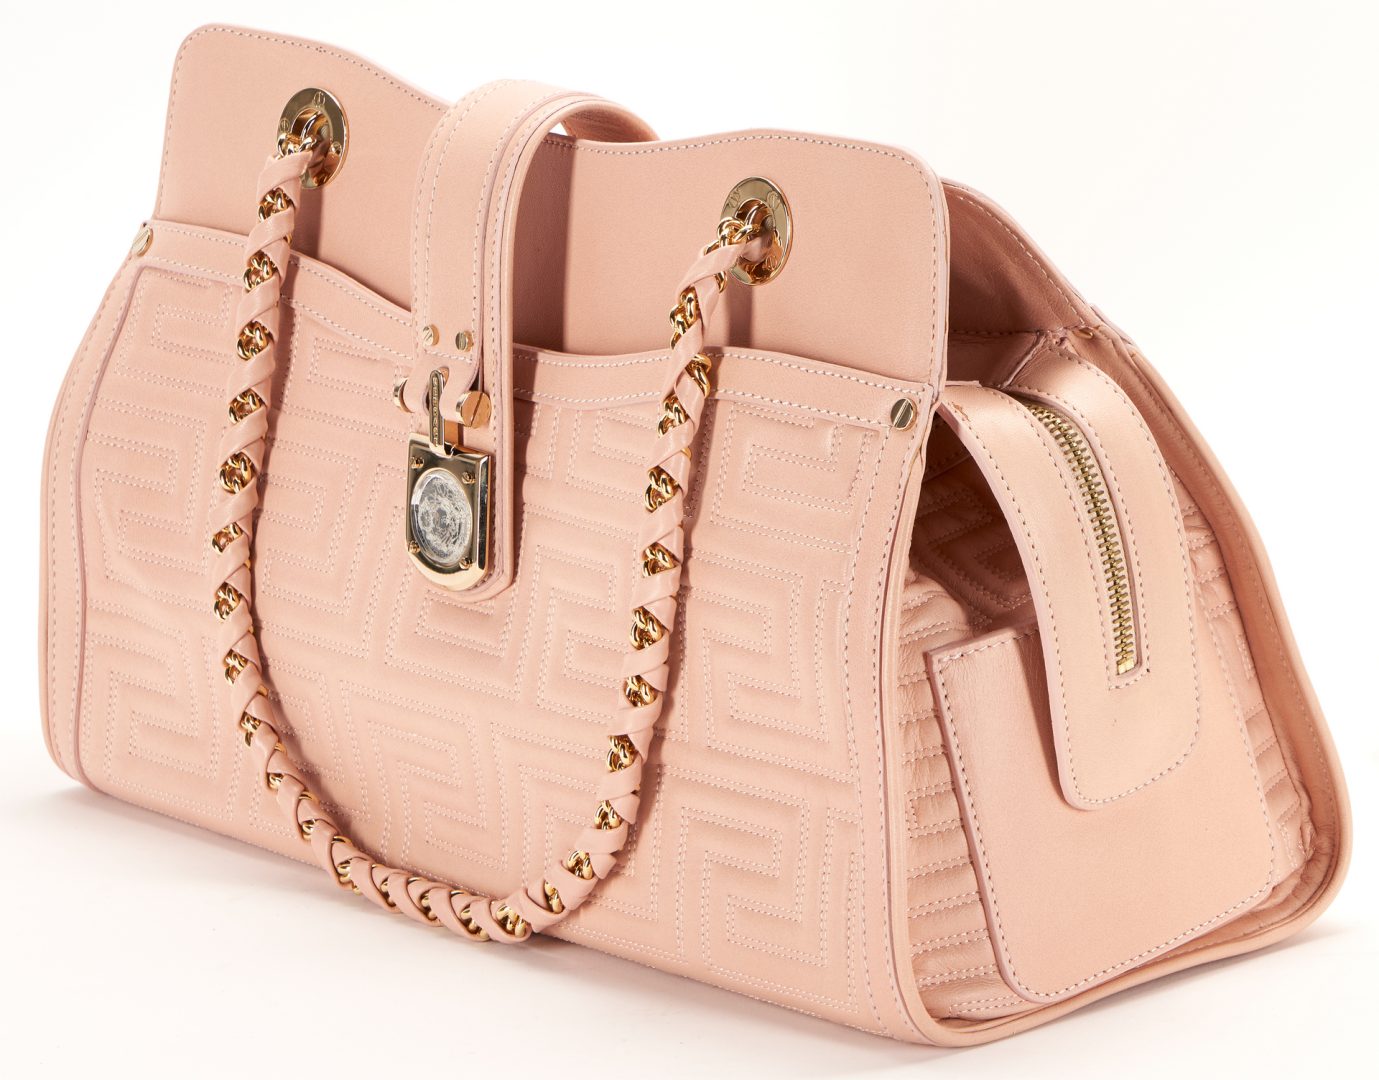 Lot 1094: 2 European Designer Handbags, Louis Vuitton & Versace